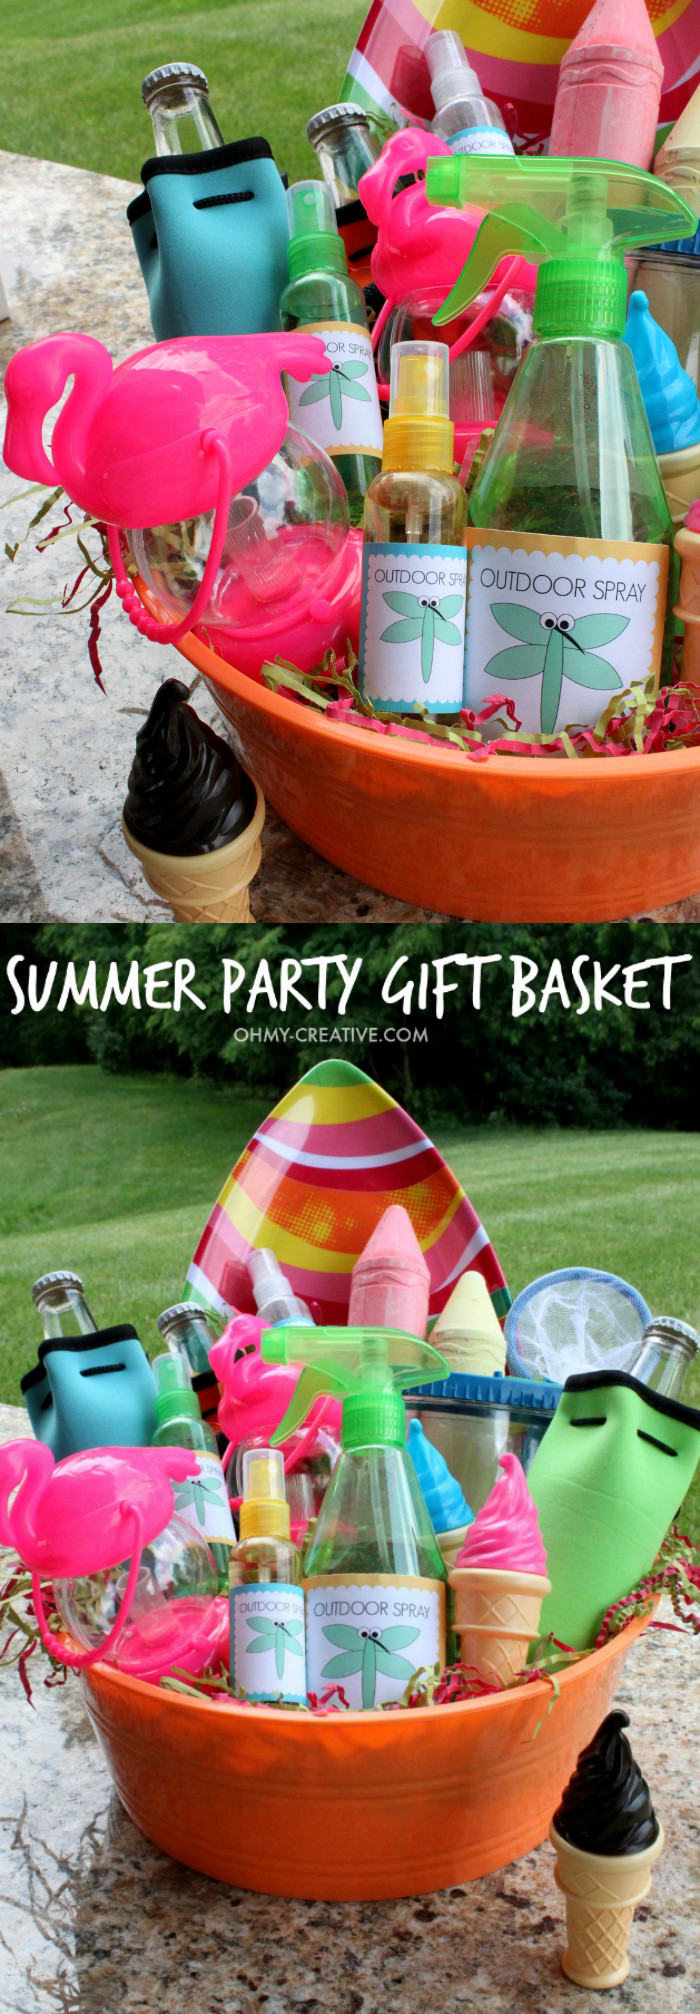 Summer Basket Ideas
 Summer Party Gift Basket Oh My Creative